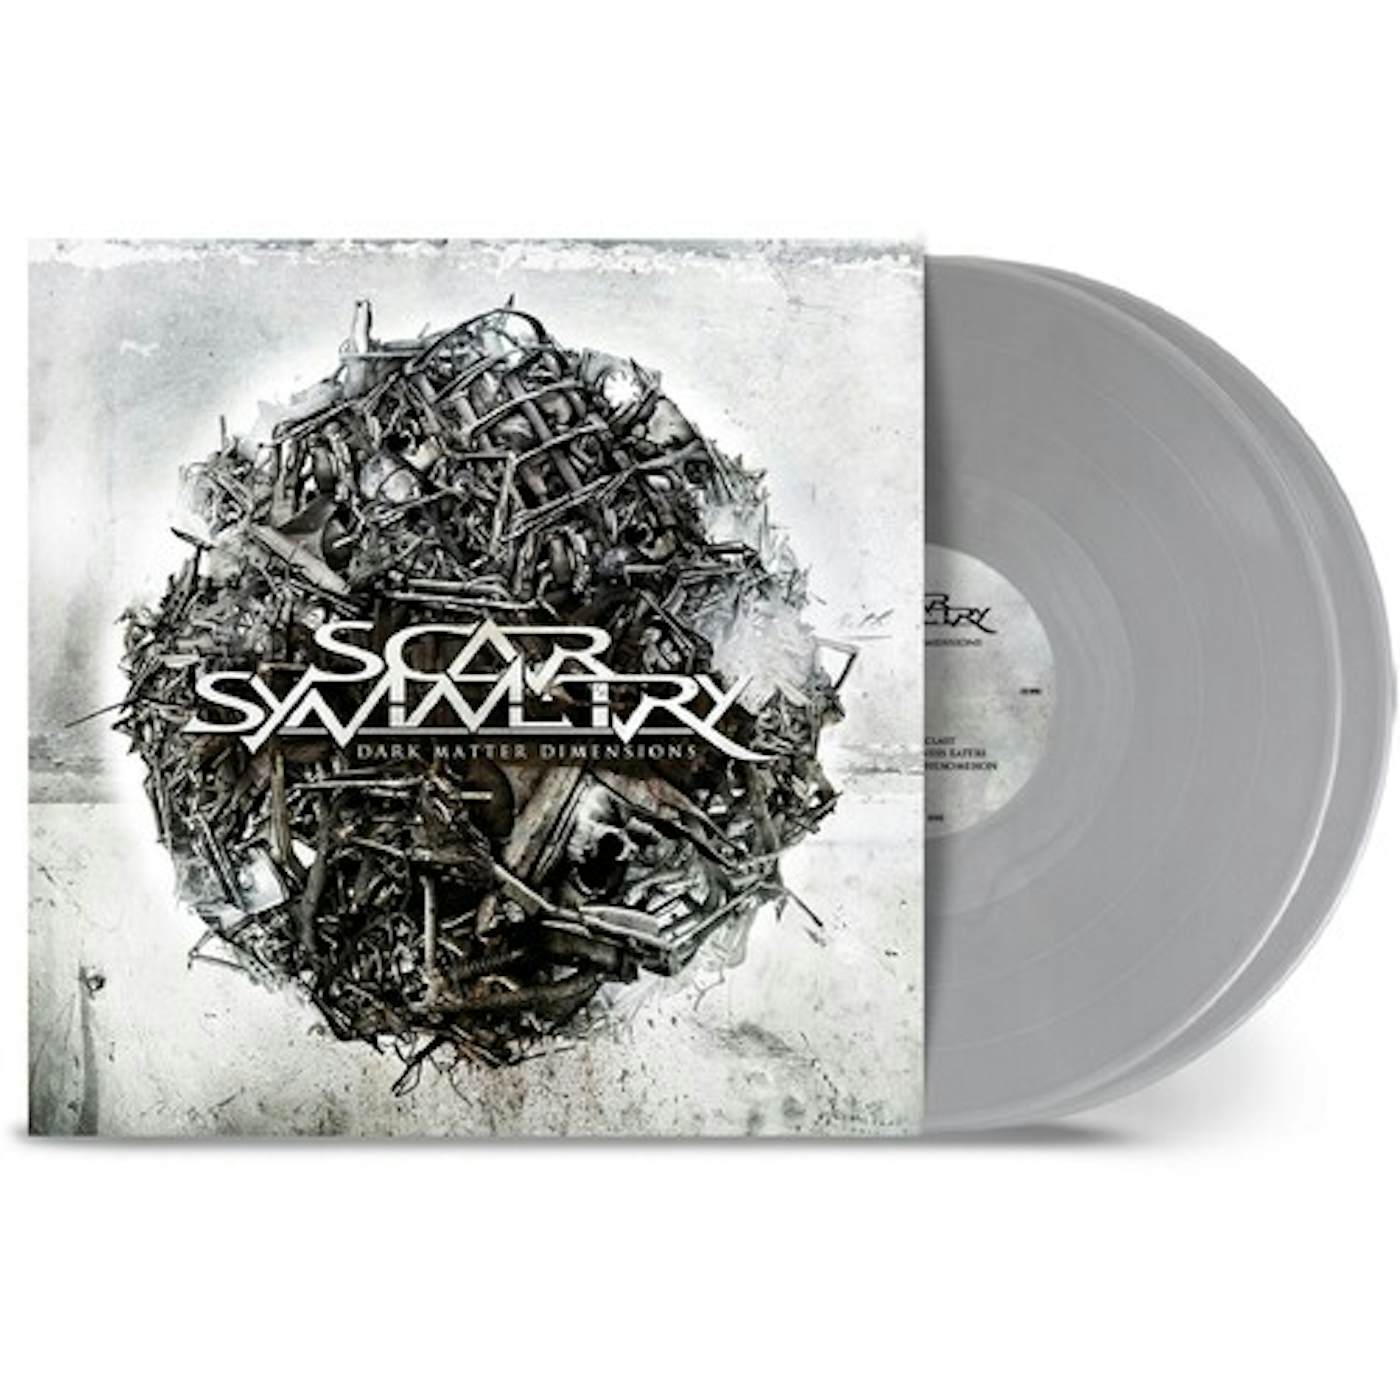 Scar Symmetry DARK MATTER DIMENSIONS - GRAY Vinyl Record